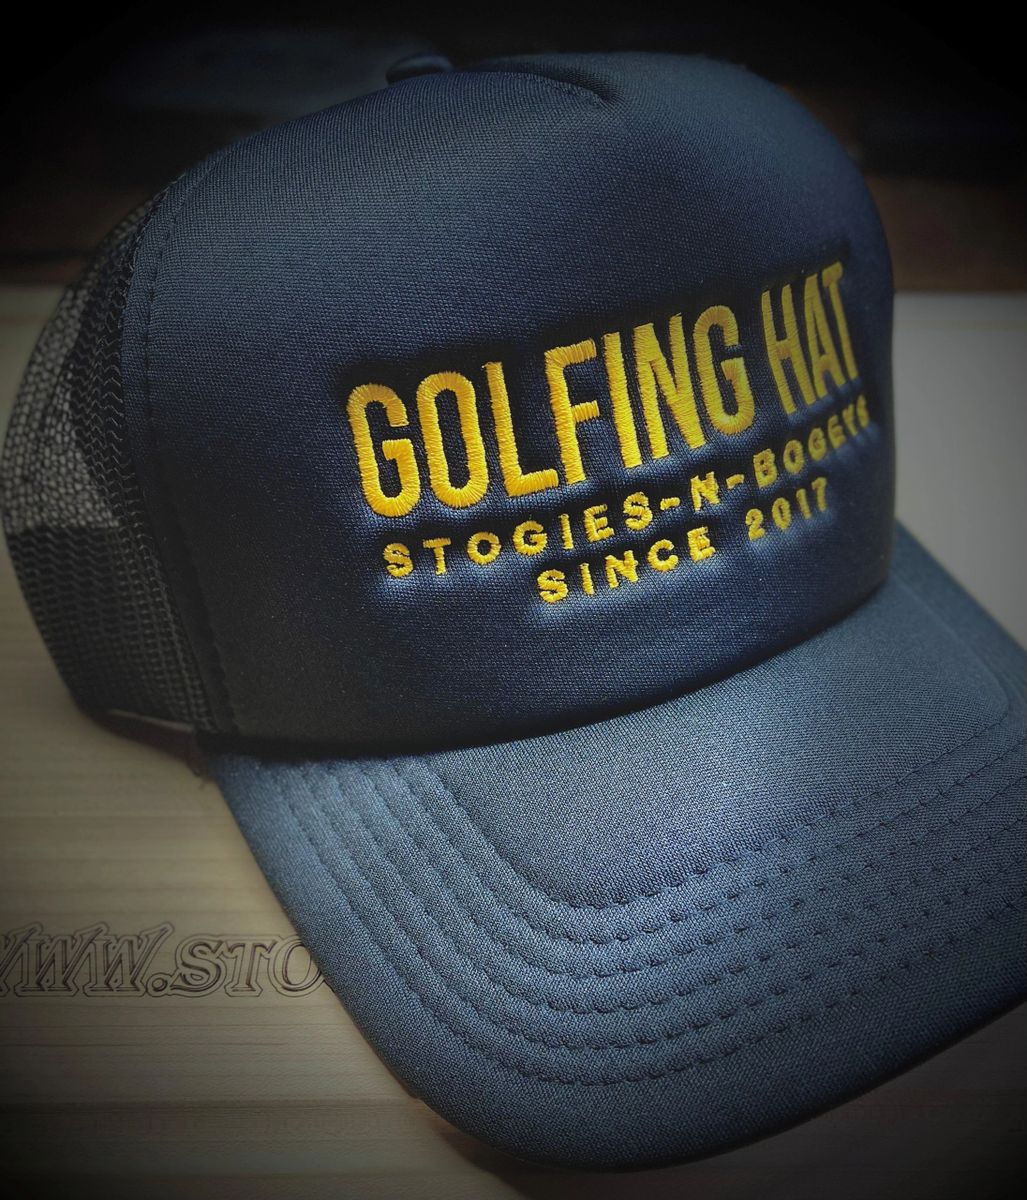 Golfing Hat